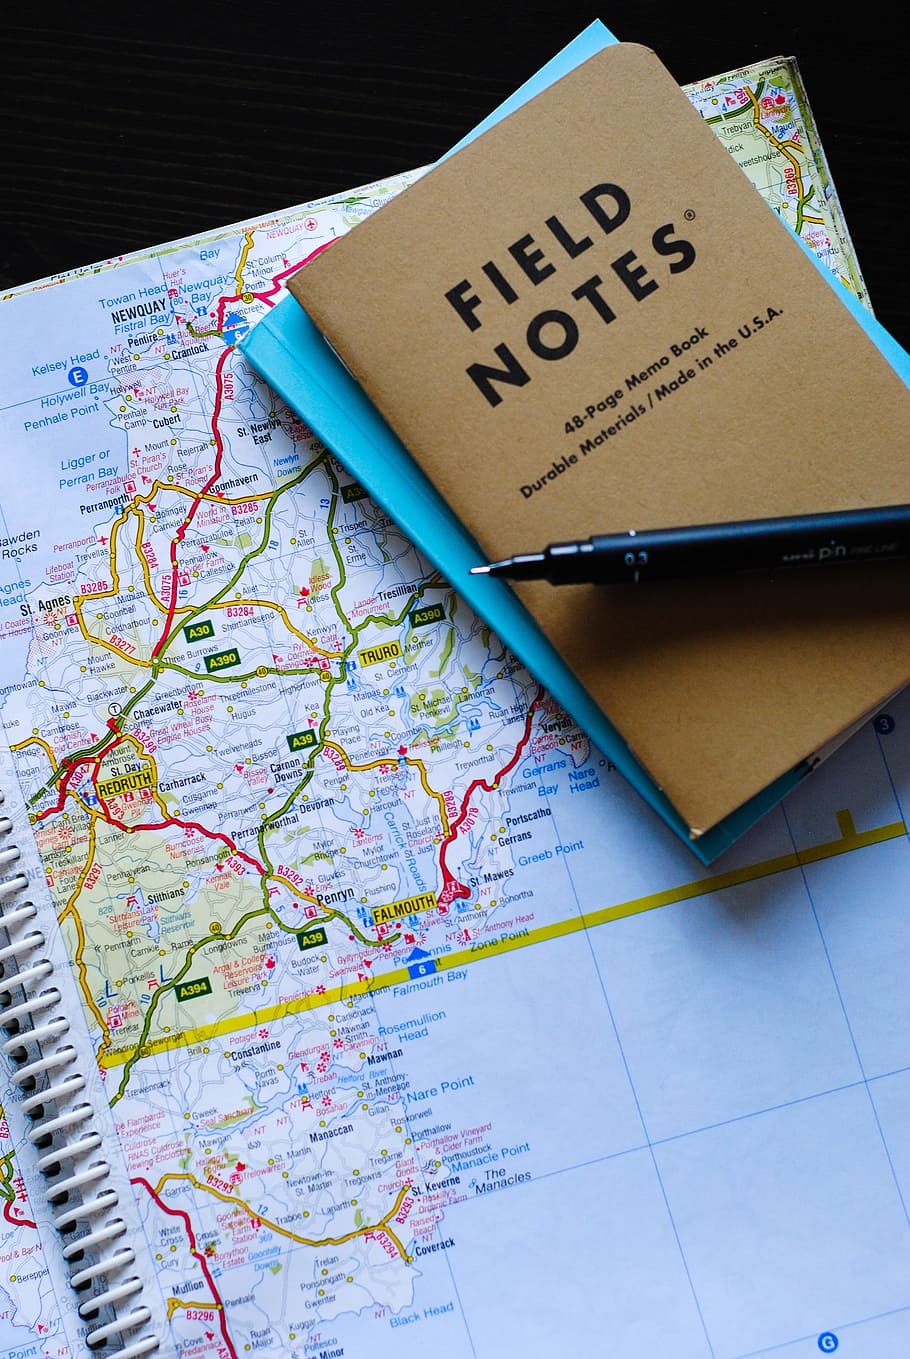 HD Wallpaper Black Gel Pen On Field Notes Book Map Directions